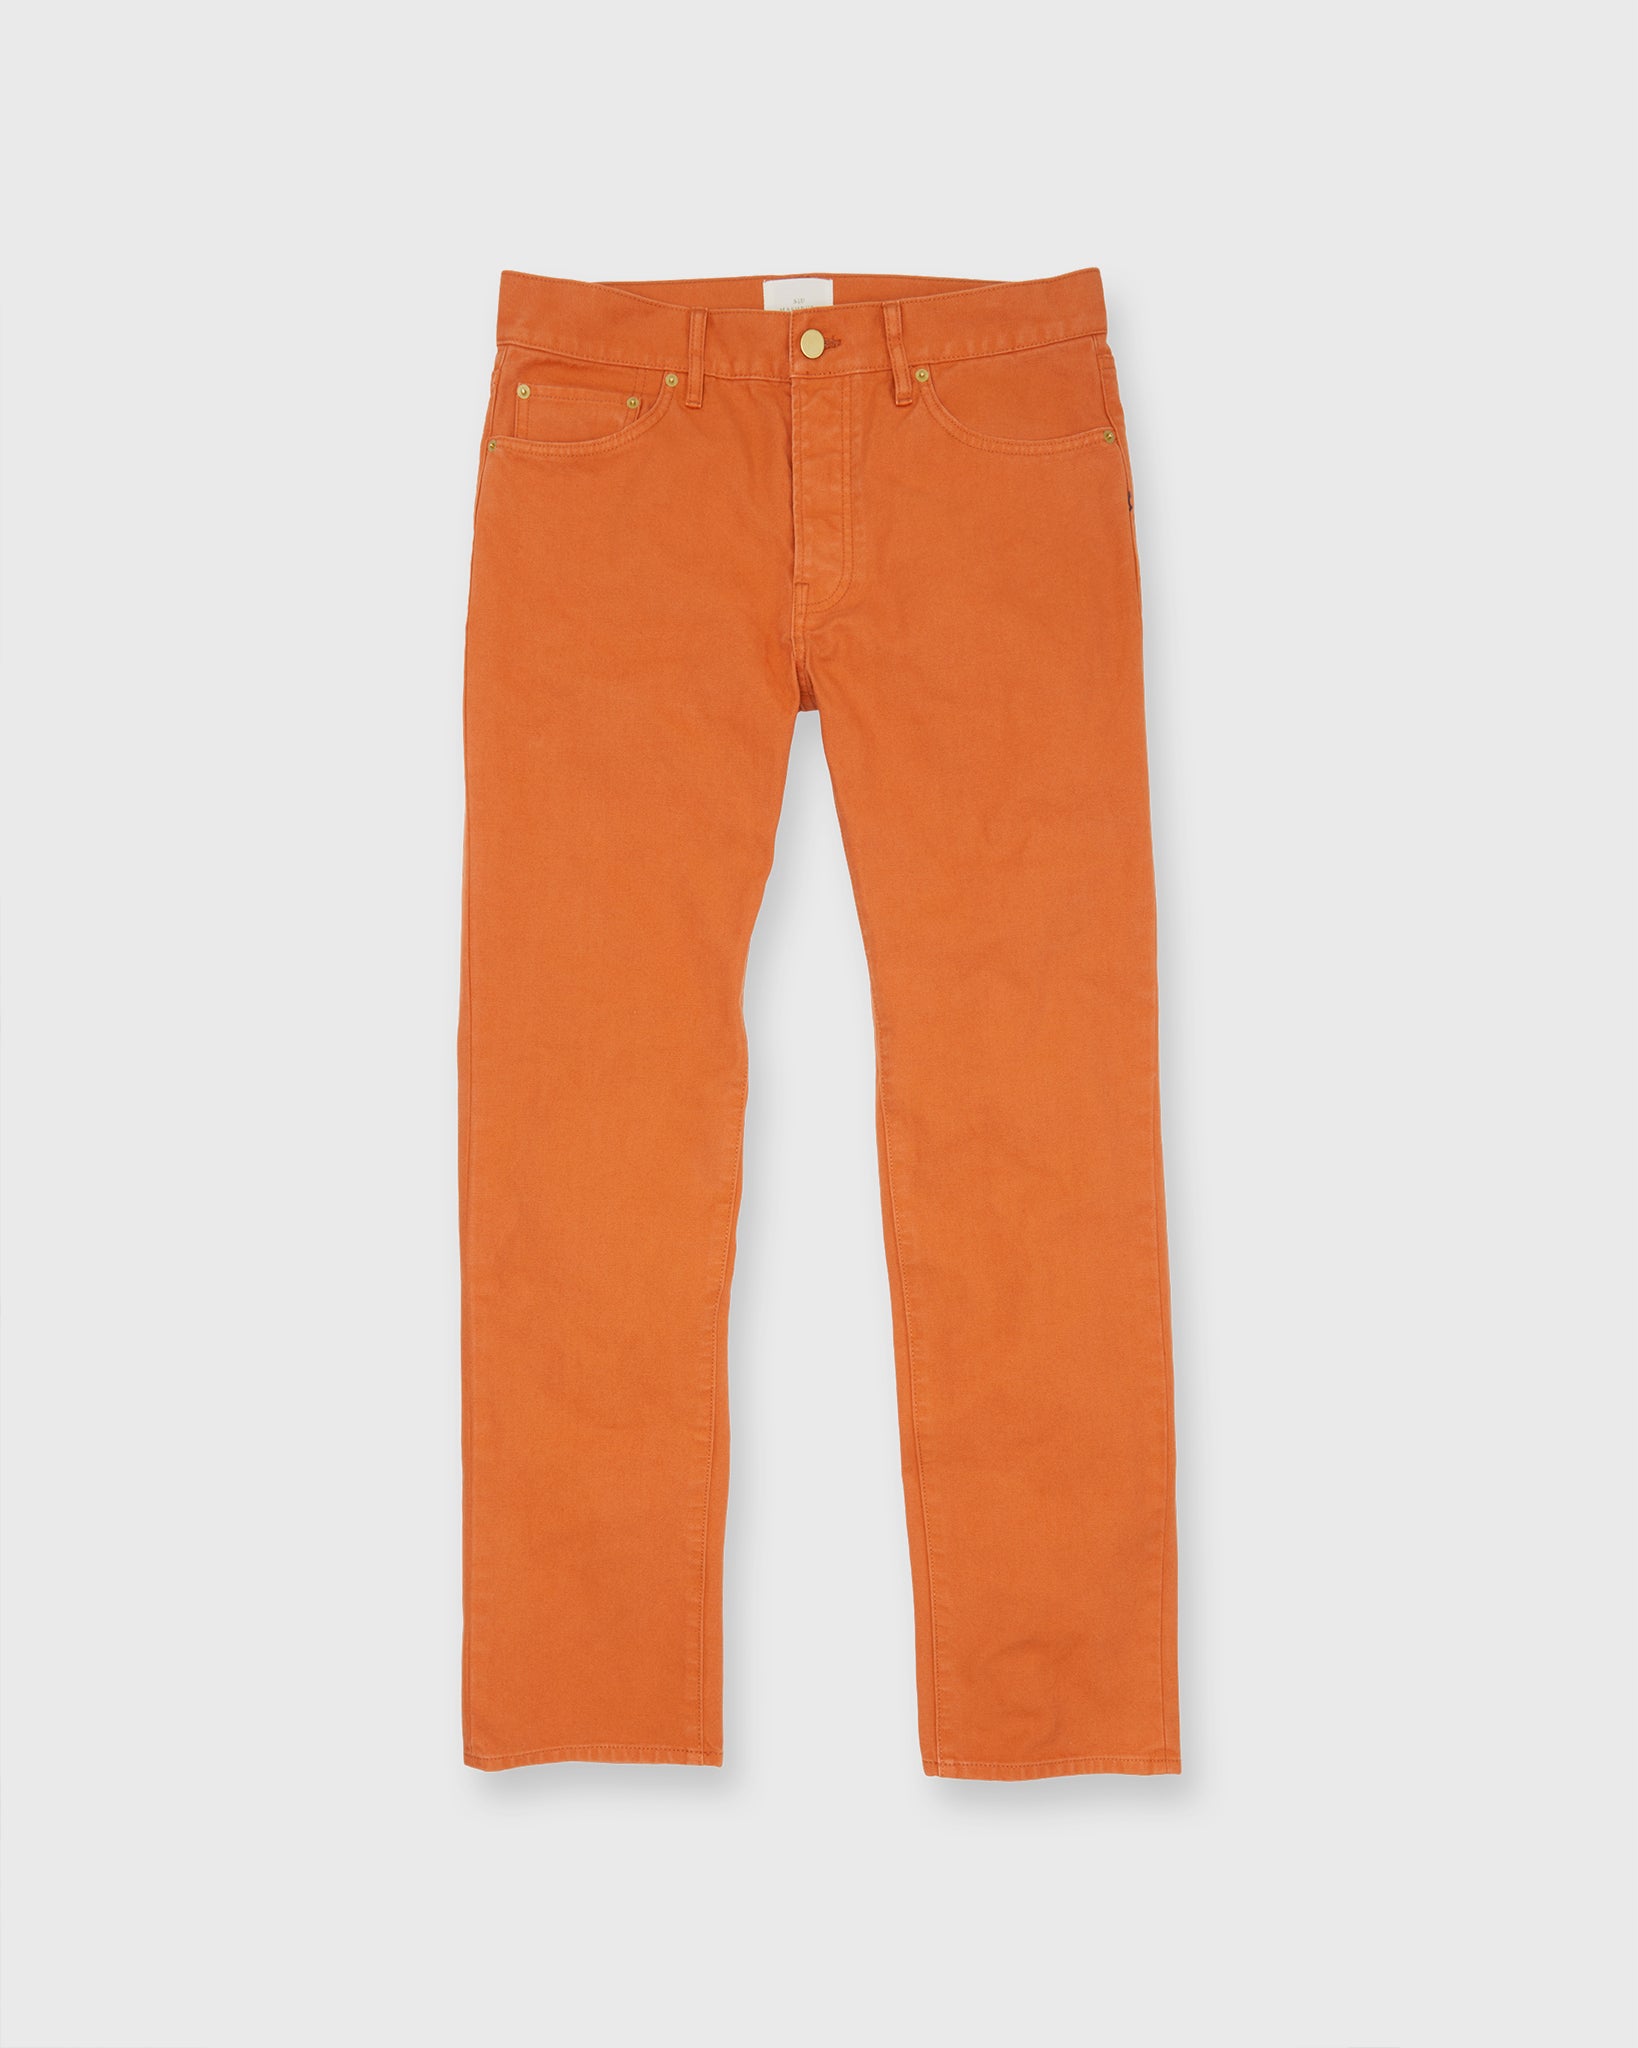 Shop Canvas Straight in | Sid Slim 5-Pocket Orange Mashburn Pant